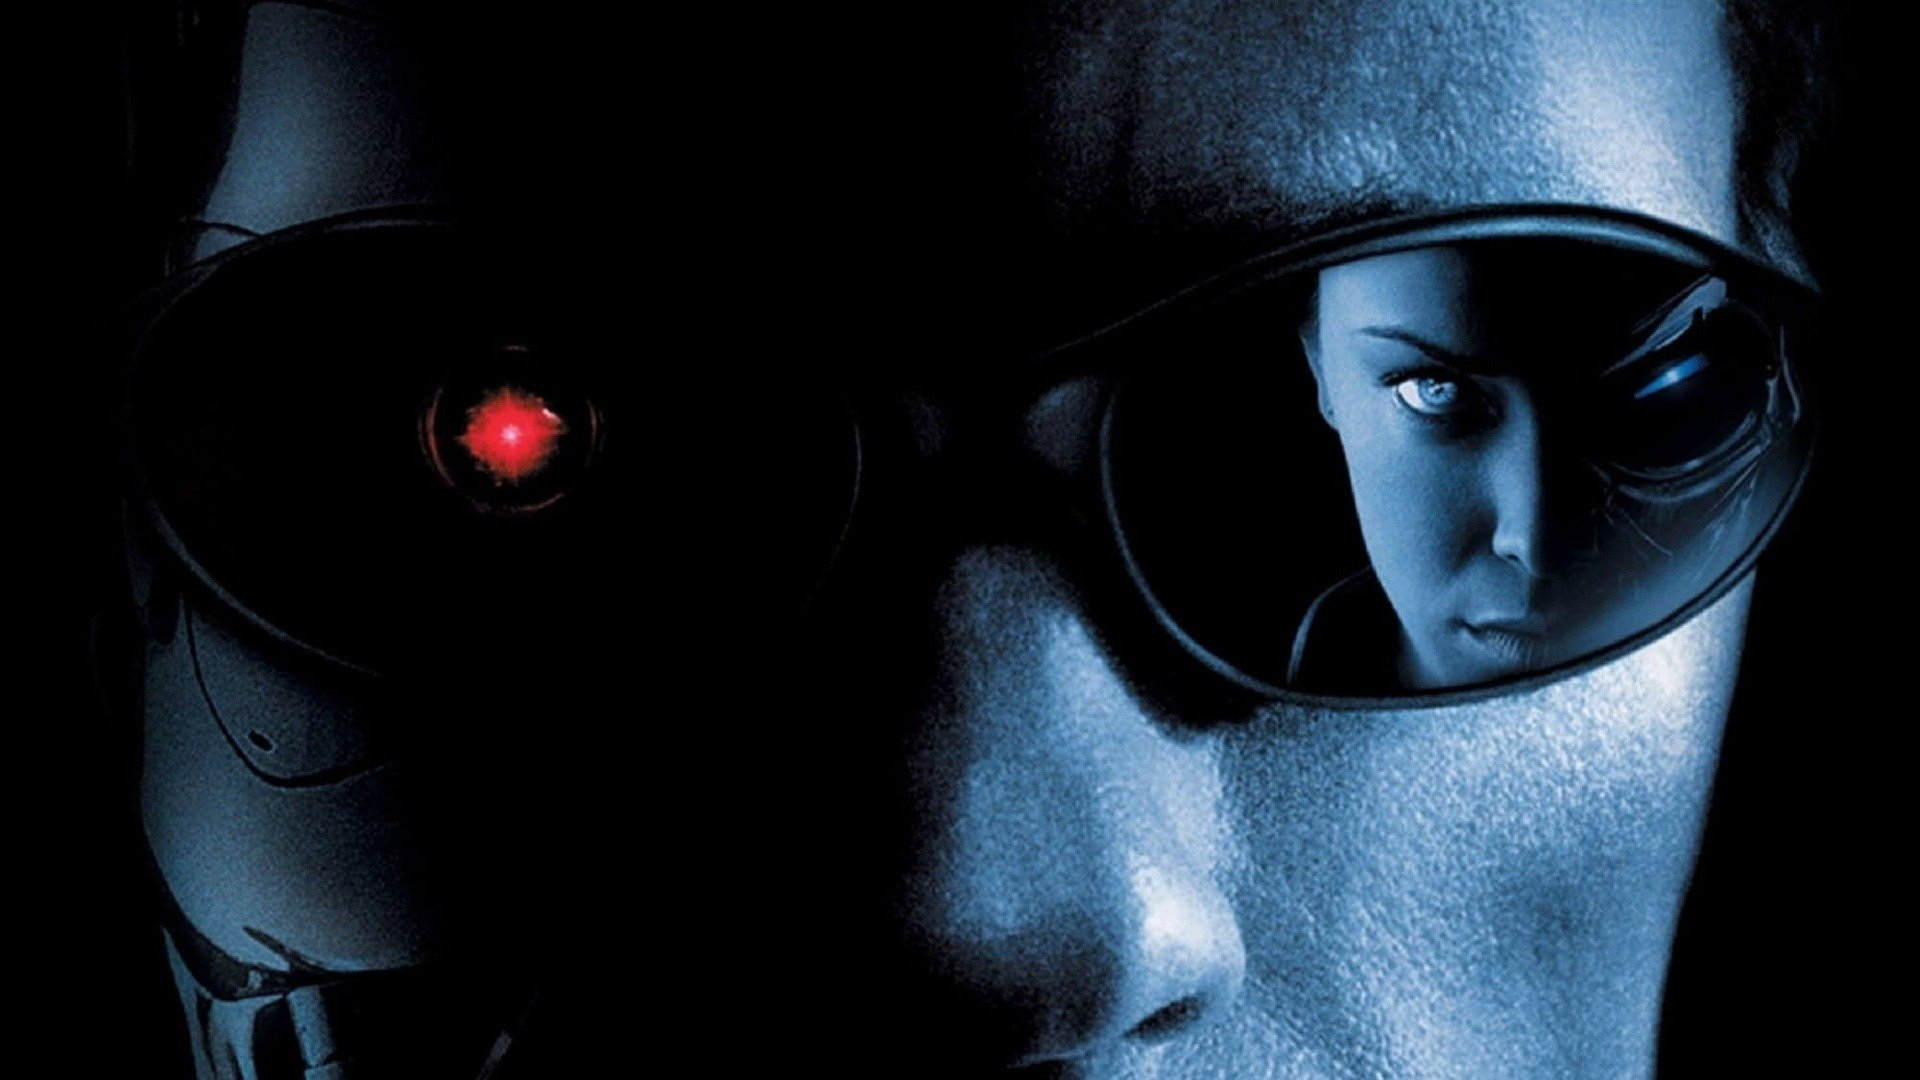 Terminator 3: Koneiden kapina